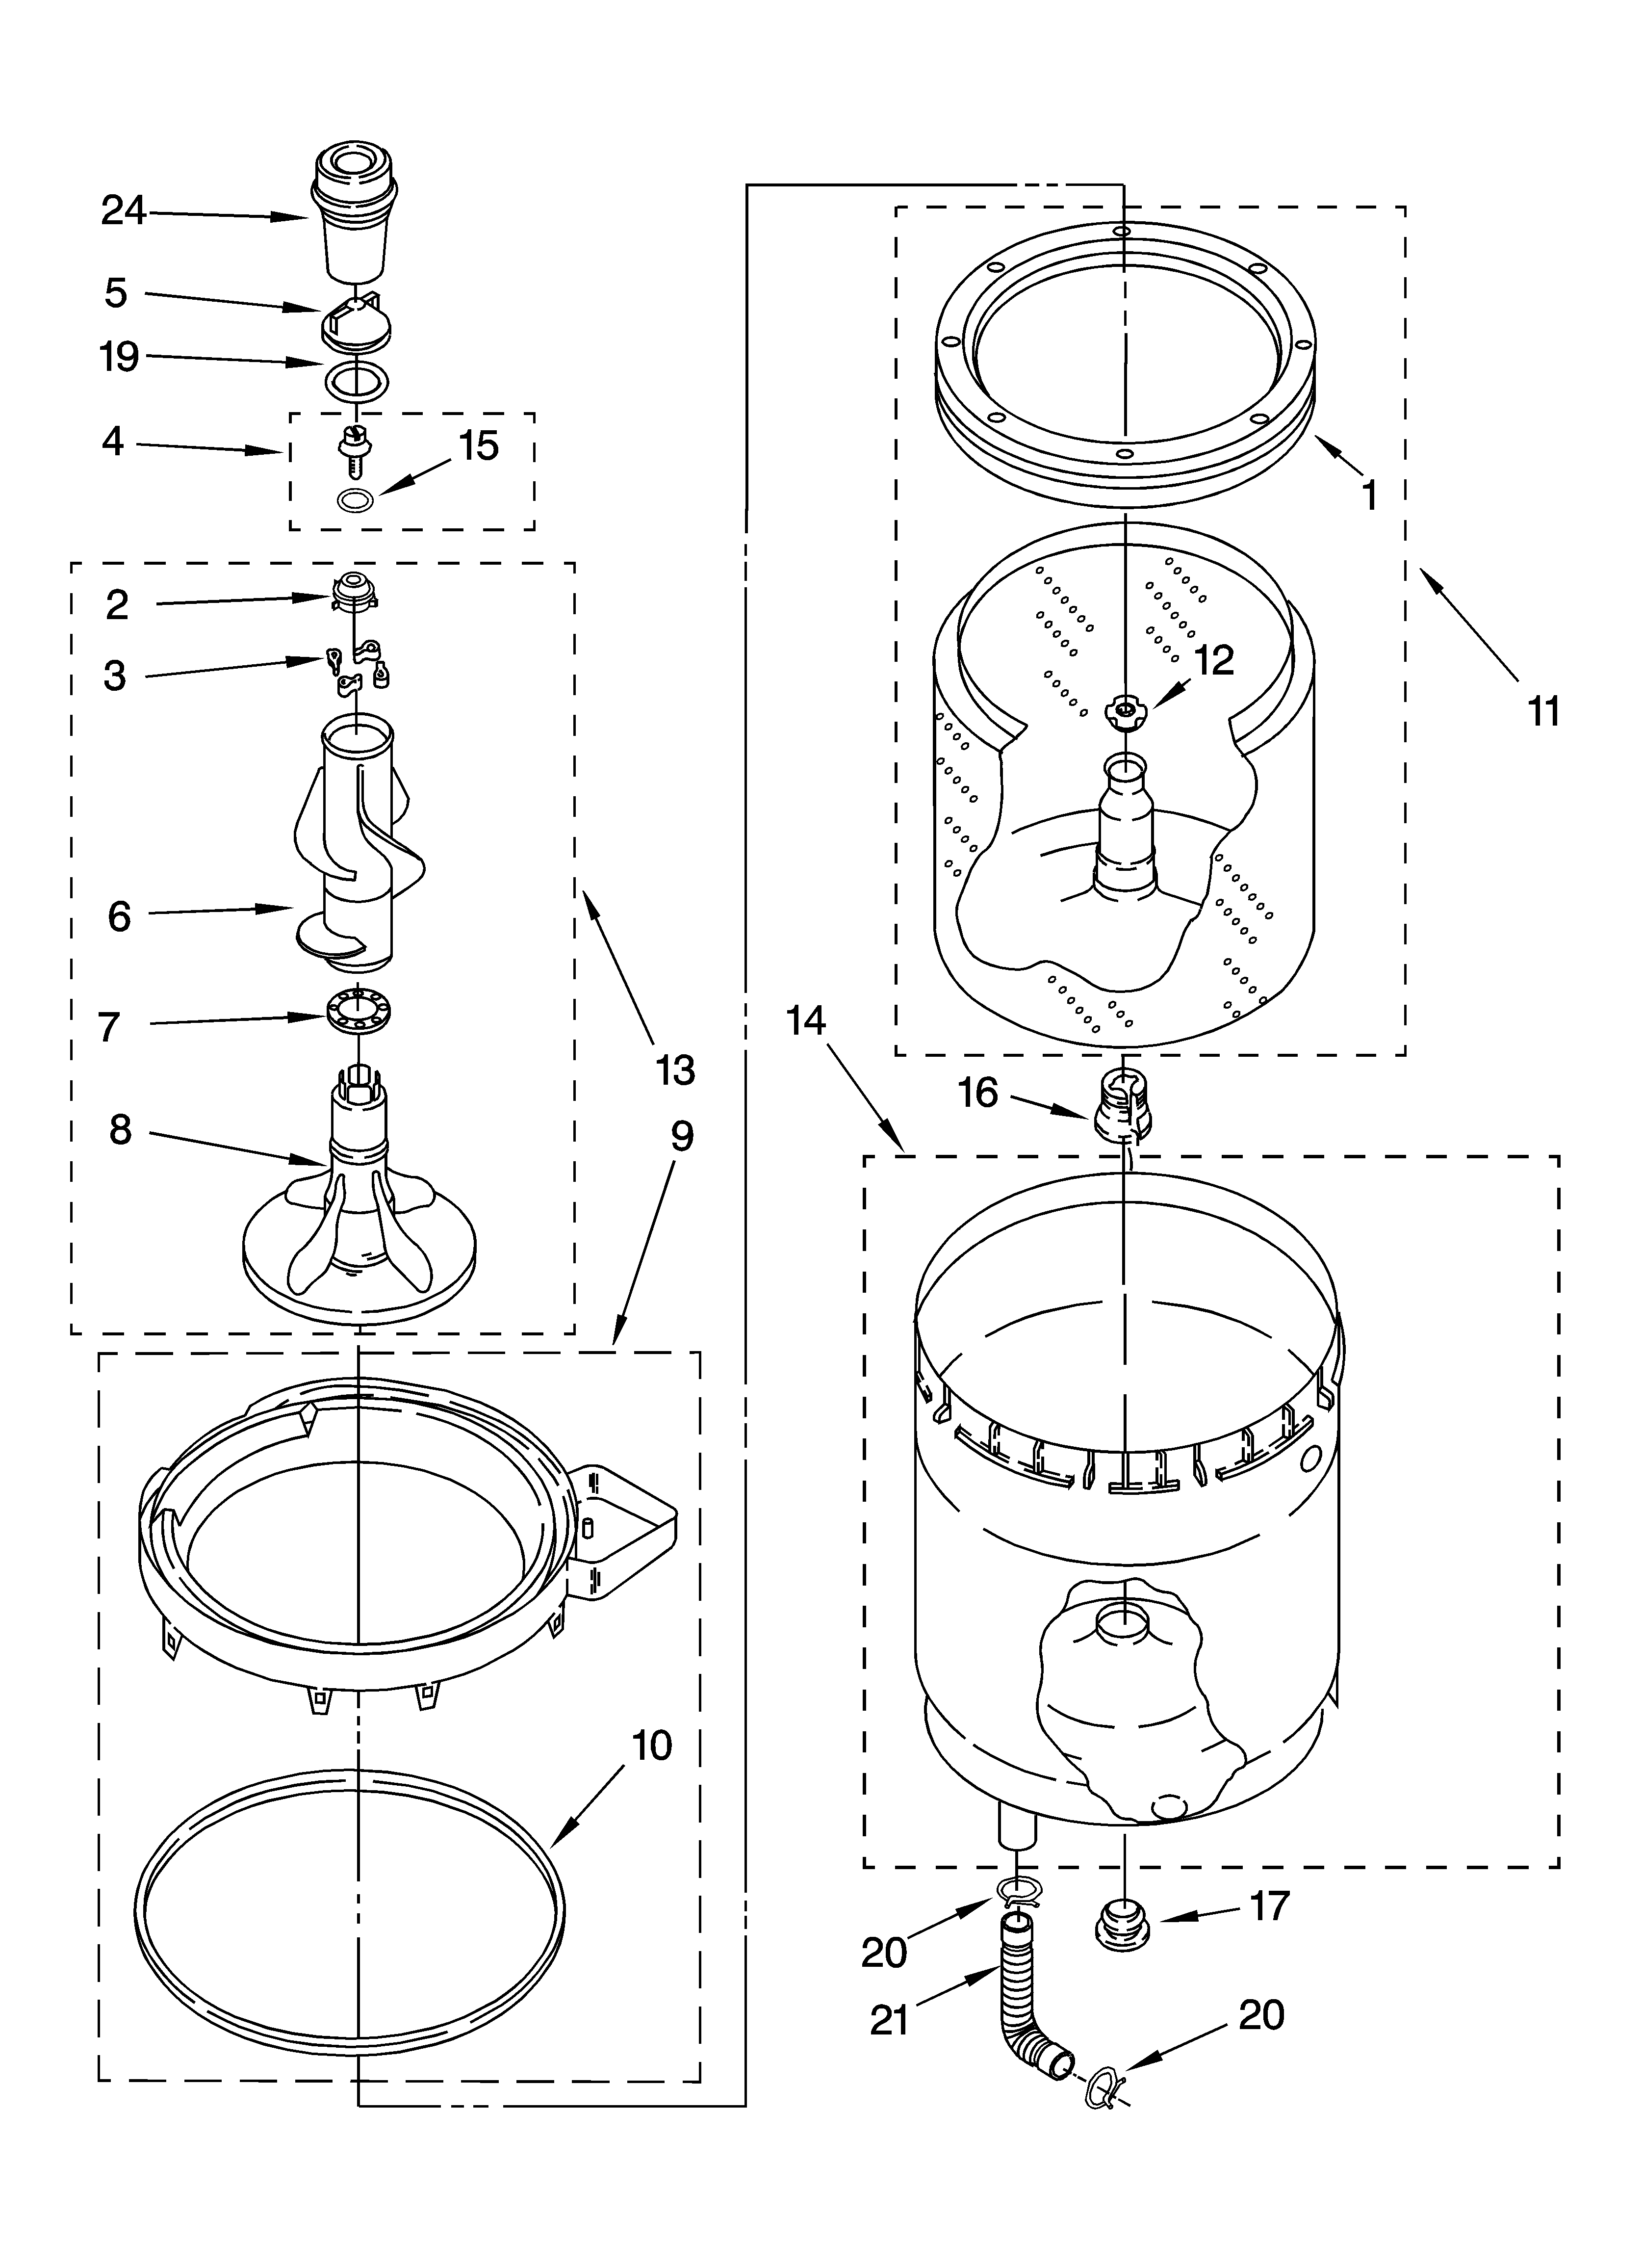 Kenmore He2 Plus Washer Parts Diagram Wiring Diagram